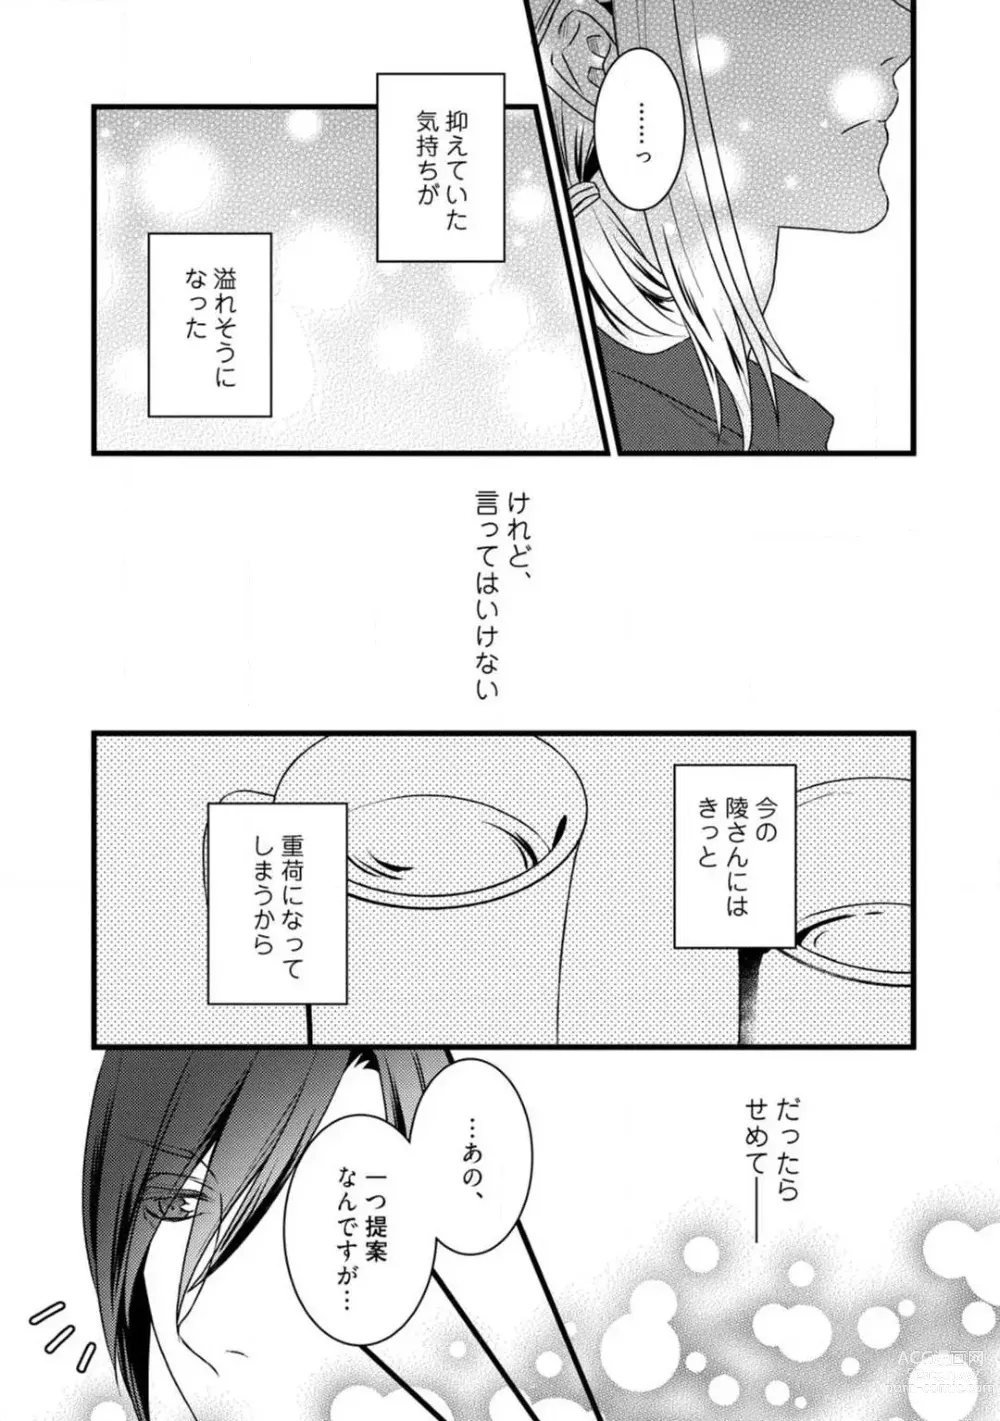 Page 327 of manga Room Share - Yajuu Host to Futarikurashi 1-12